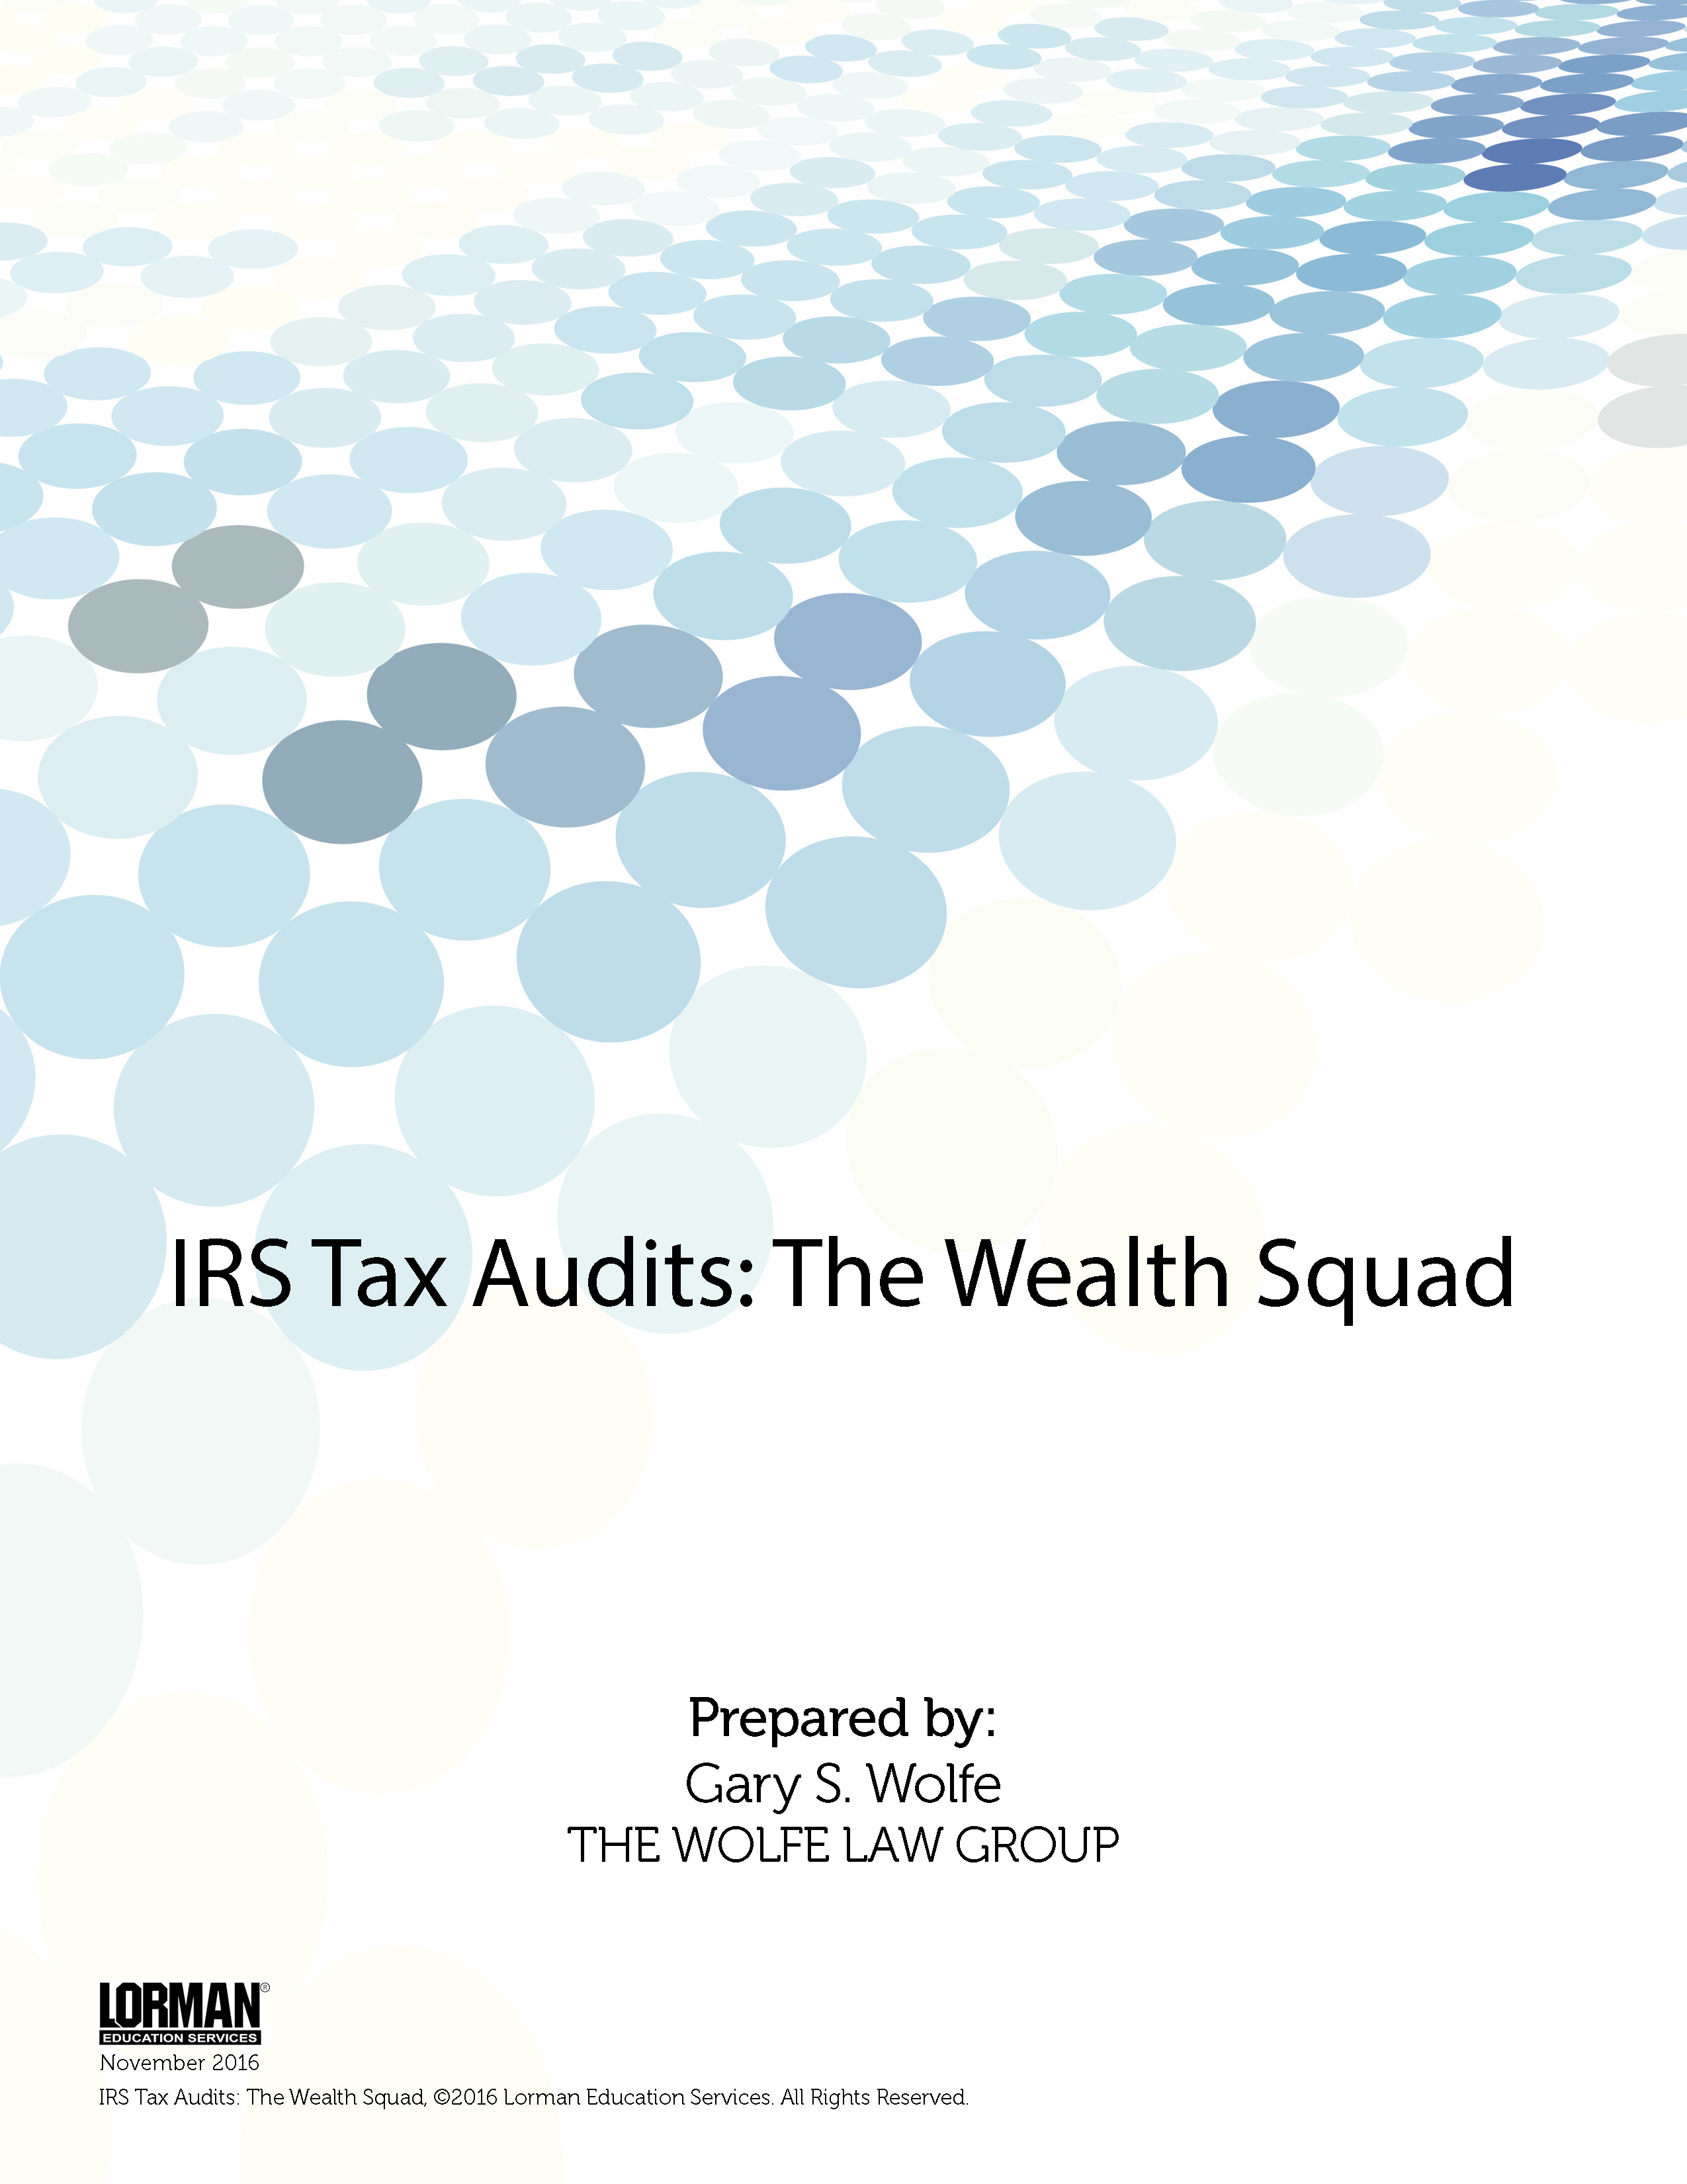 IRS Tax Audits - The Wealth Squad